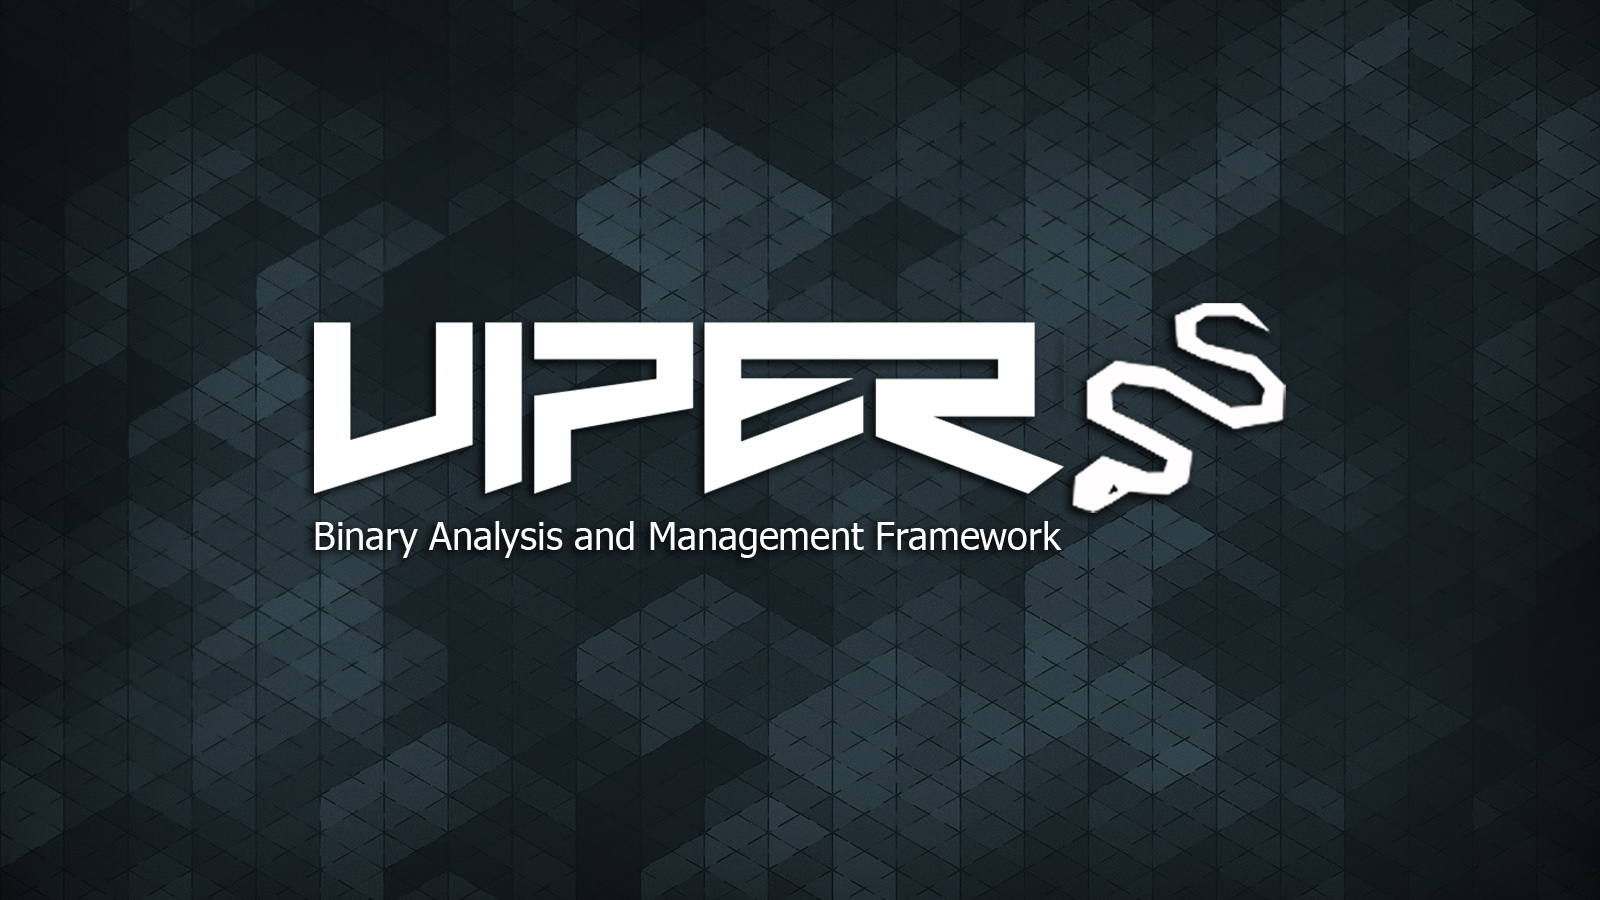 Viper - Binary Analysis and Management Framework